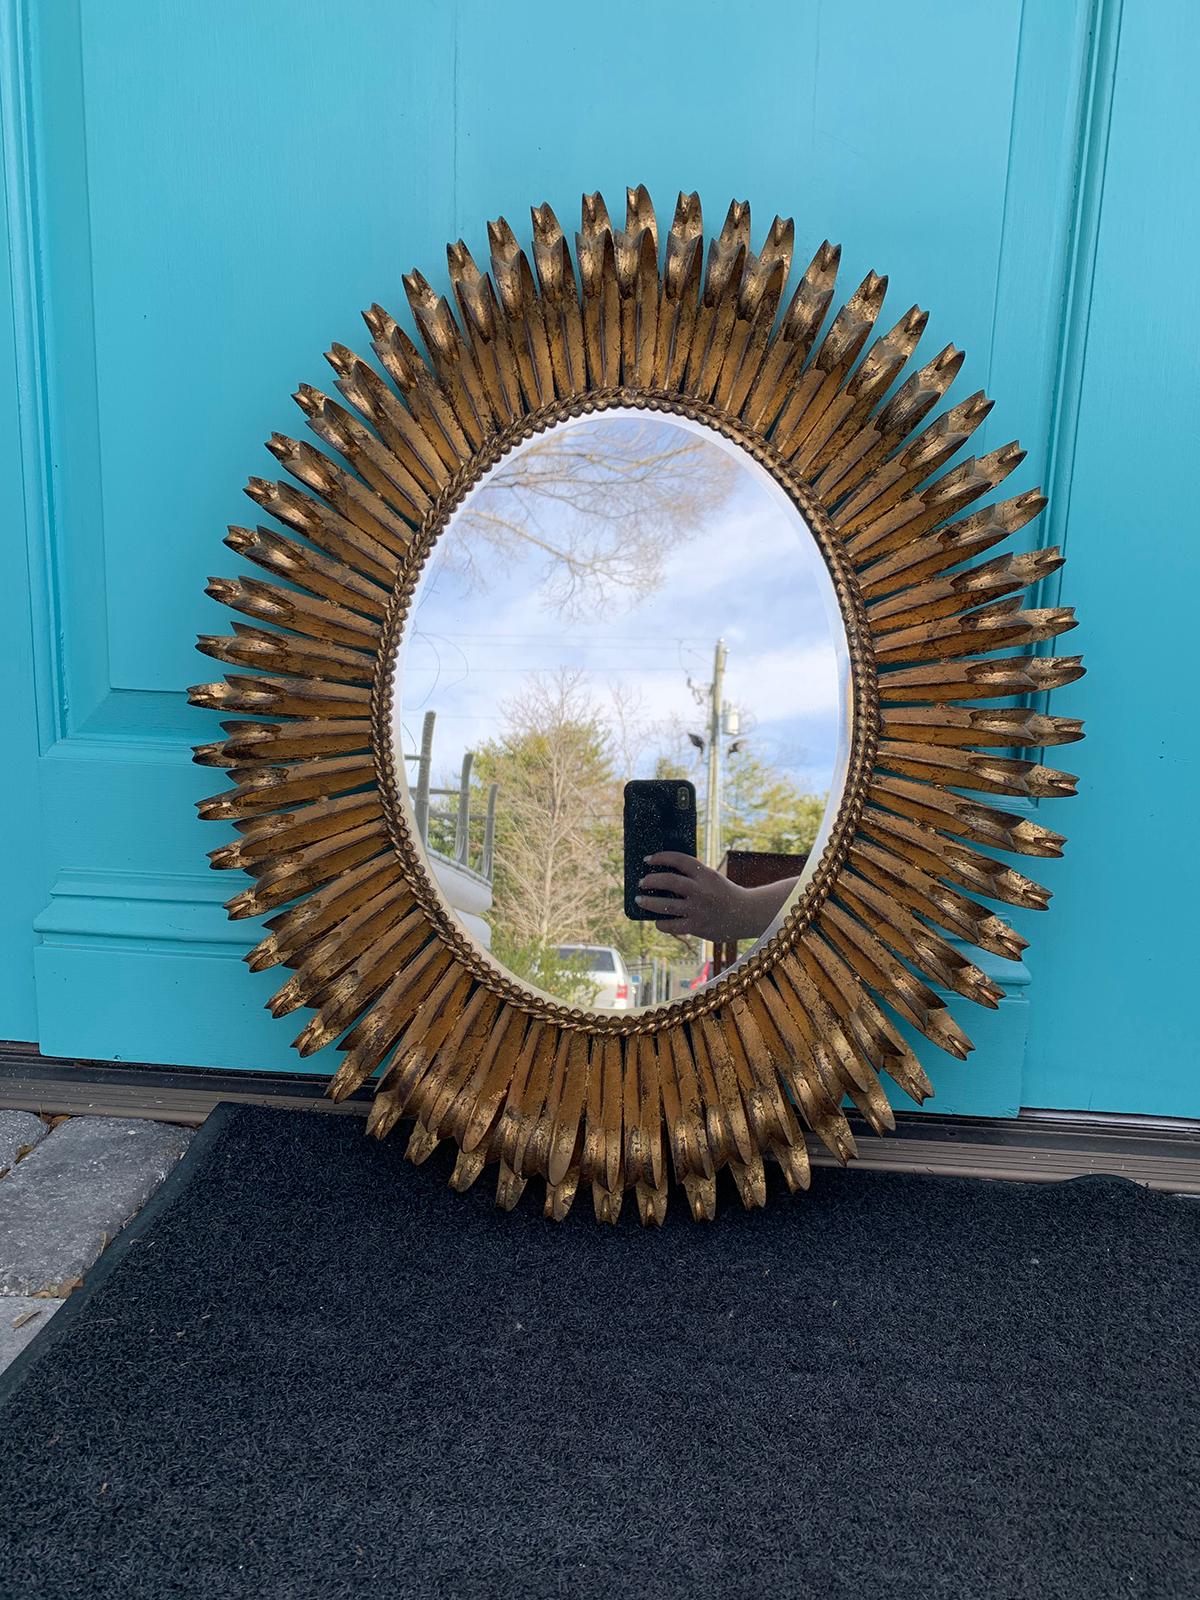 Mid-20th Century Gilt Tole Oval Sunburst Mirror, circa 1970s
Great detail